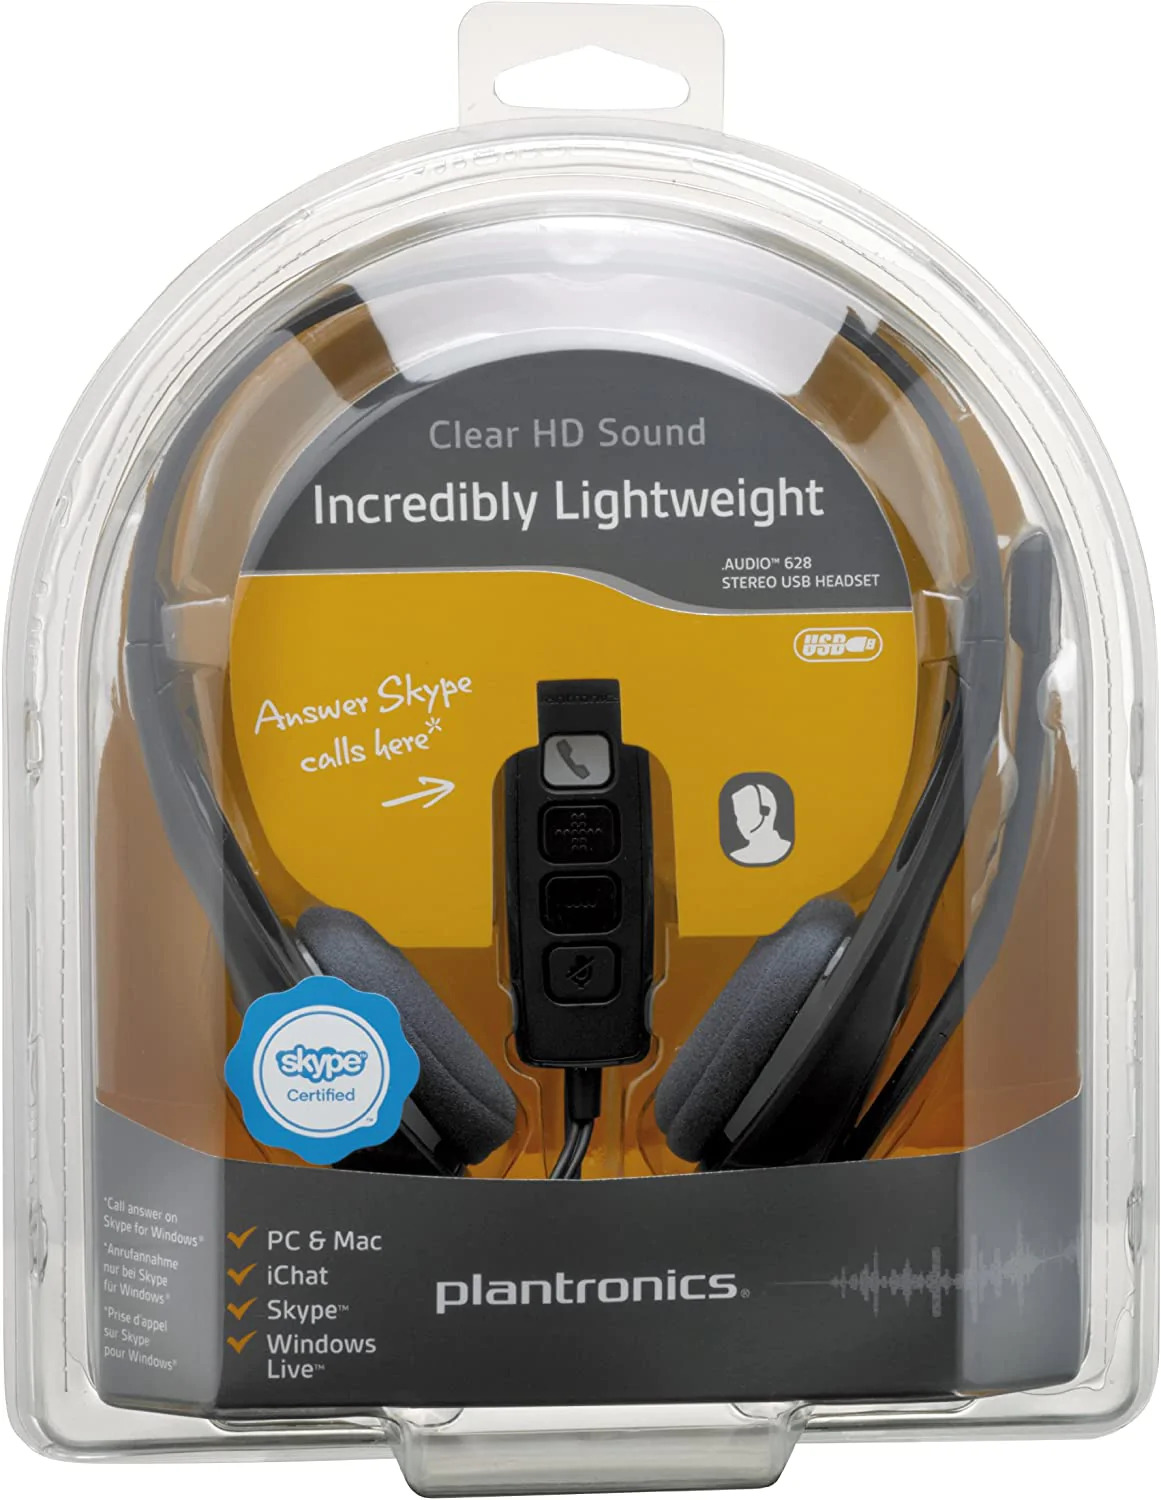 Plantronics Audio 628 Stereo USB Headset Lightweight Headband Voice / Gaming